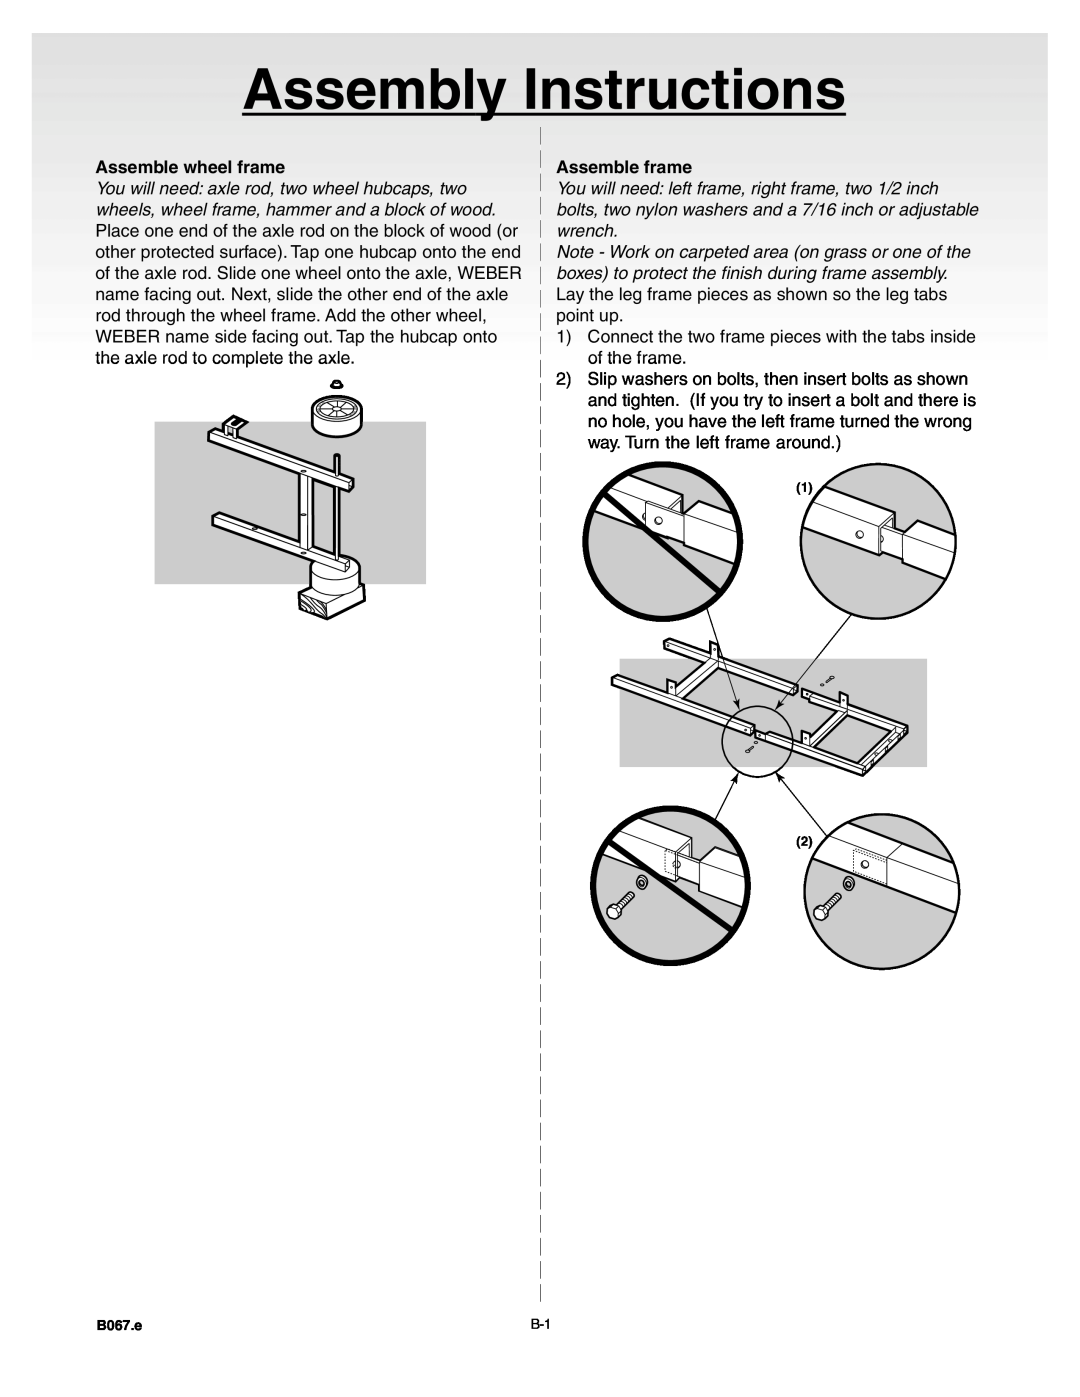 Weber A101.c, B067.E, C052.C manual Assembly Instructions, Assemble wheel frame, Assemble frame 